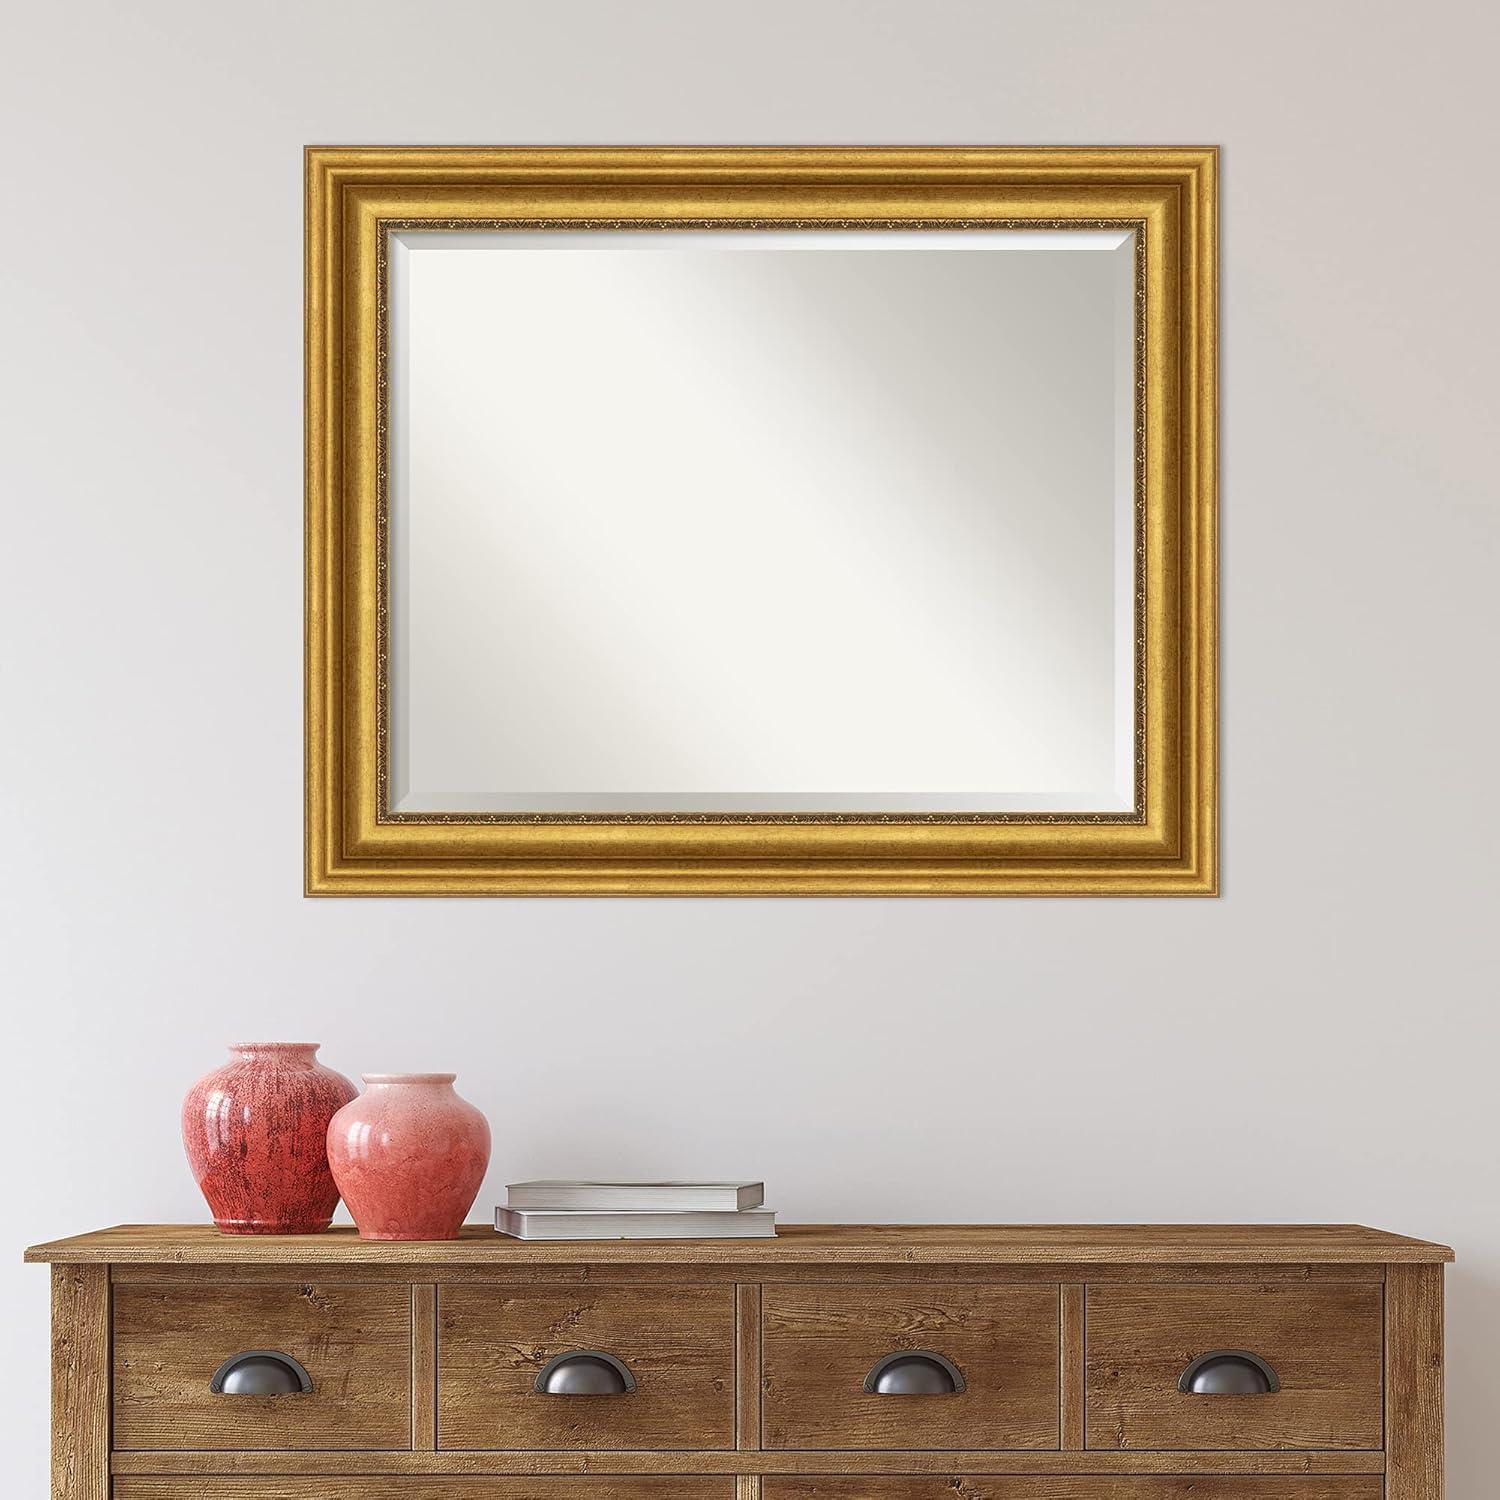 Parlor Gold Rectangular Beveled Bathroom Vanity Mirror